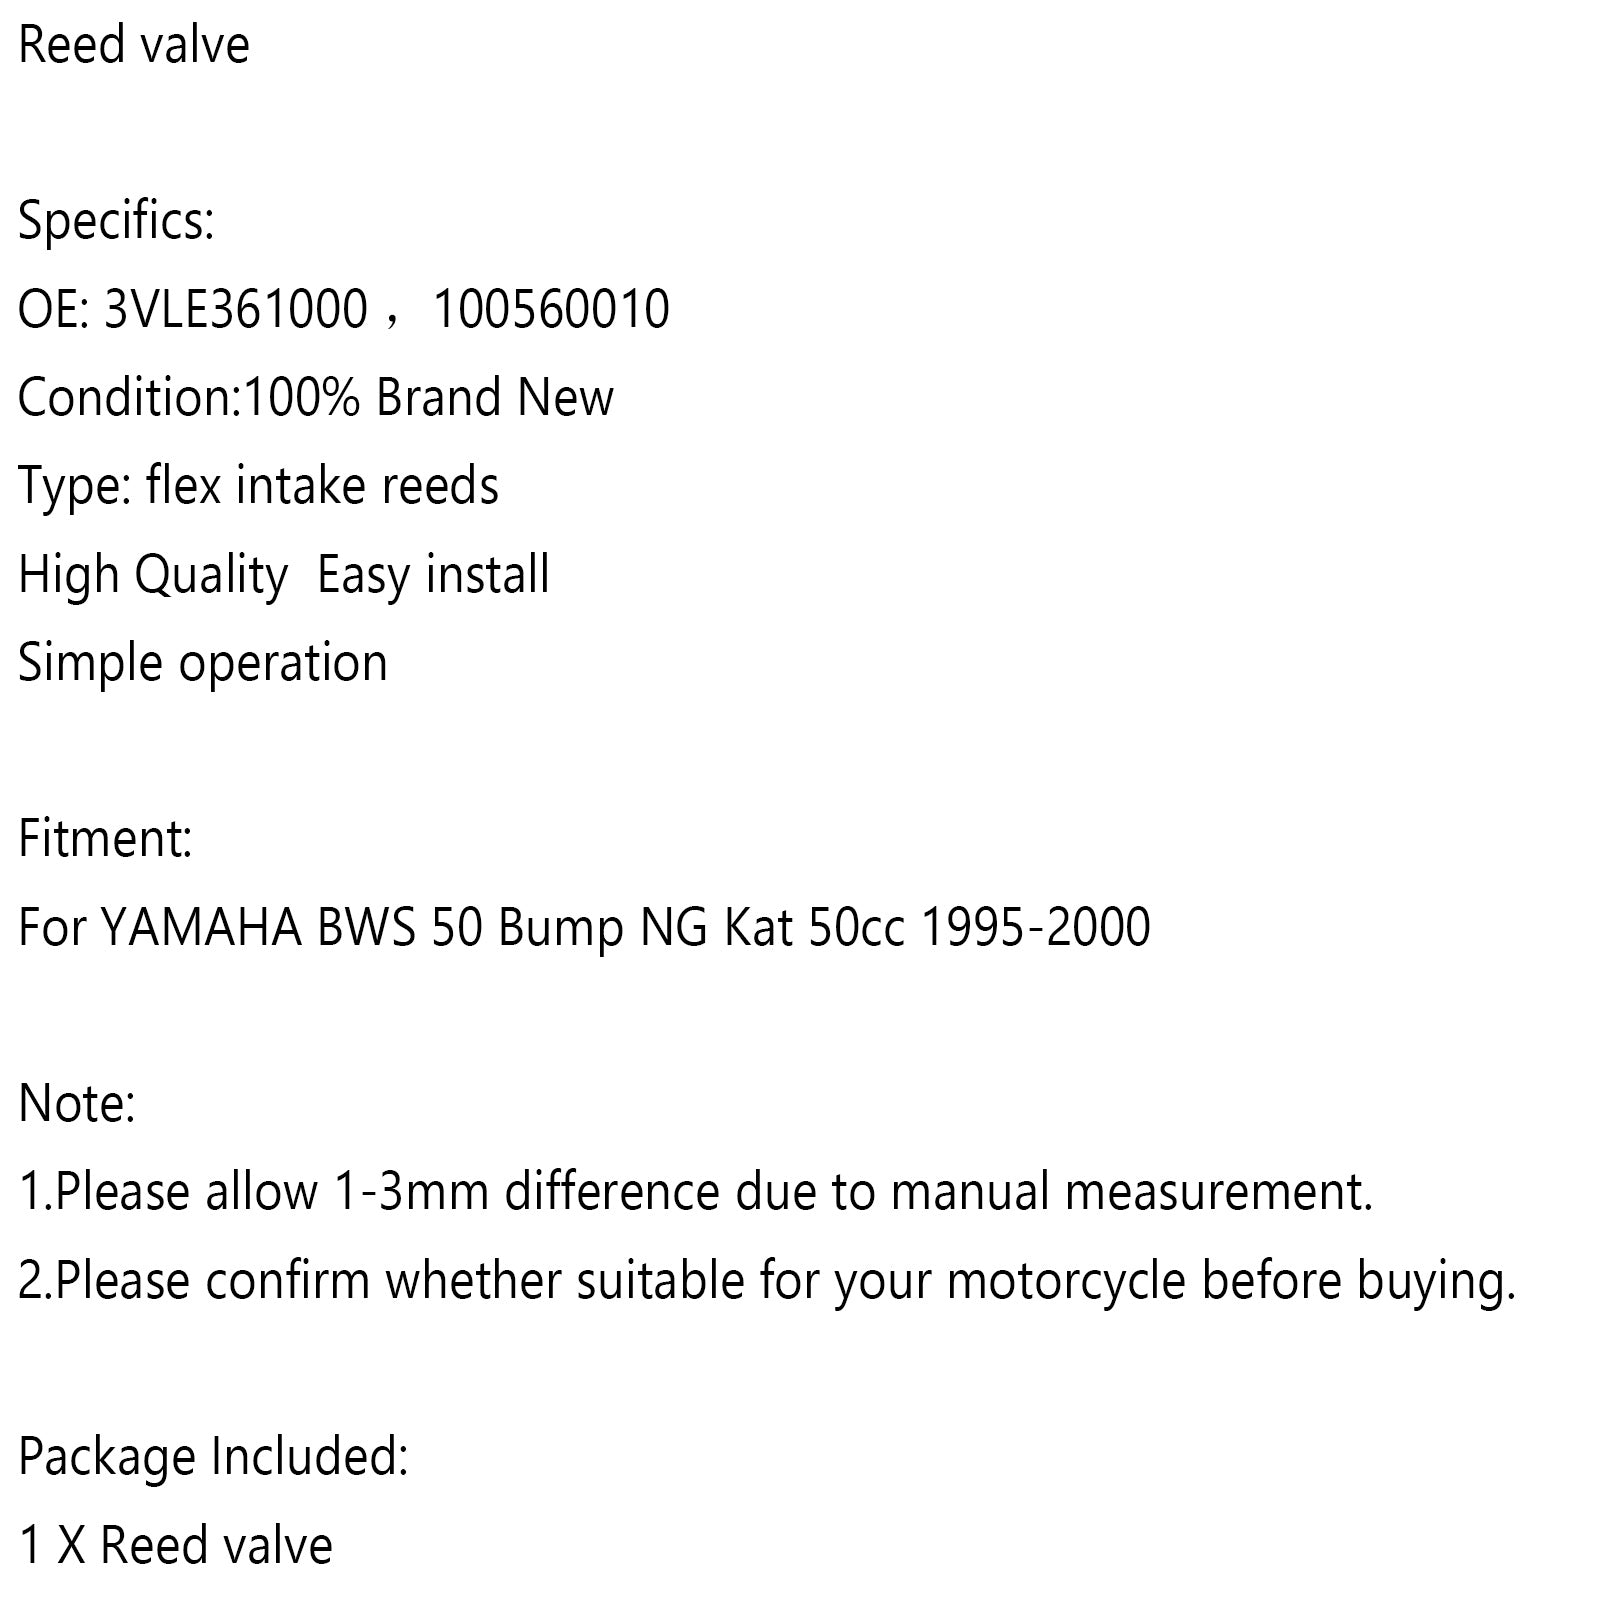 Valvola lamellare per YAMAHA BWS 50 Bump NG Kat 50cc 1995-2000 3VLE361000 Generico